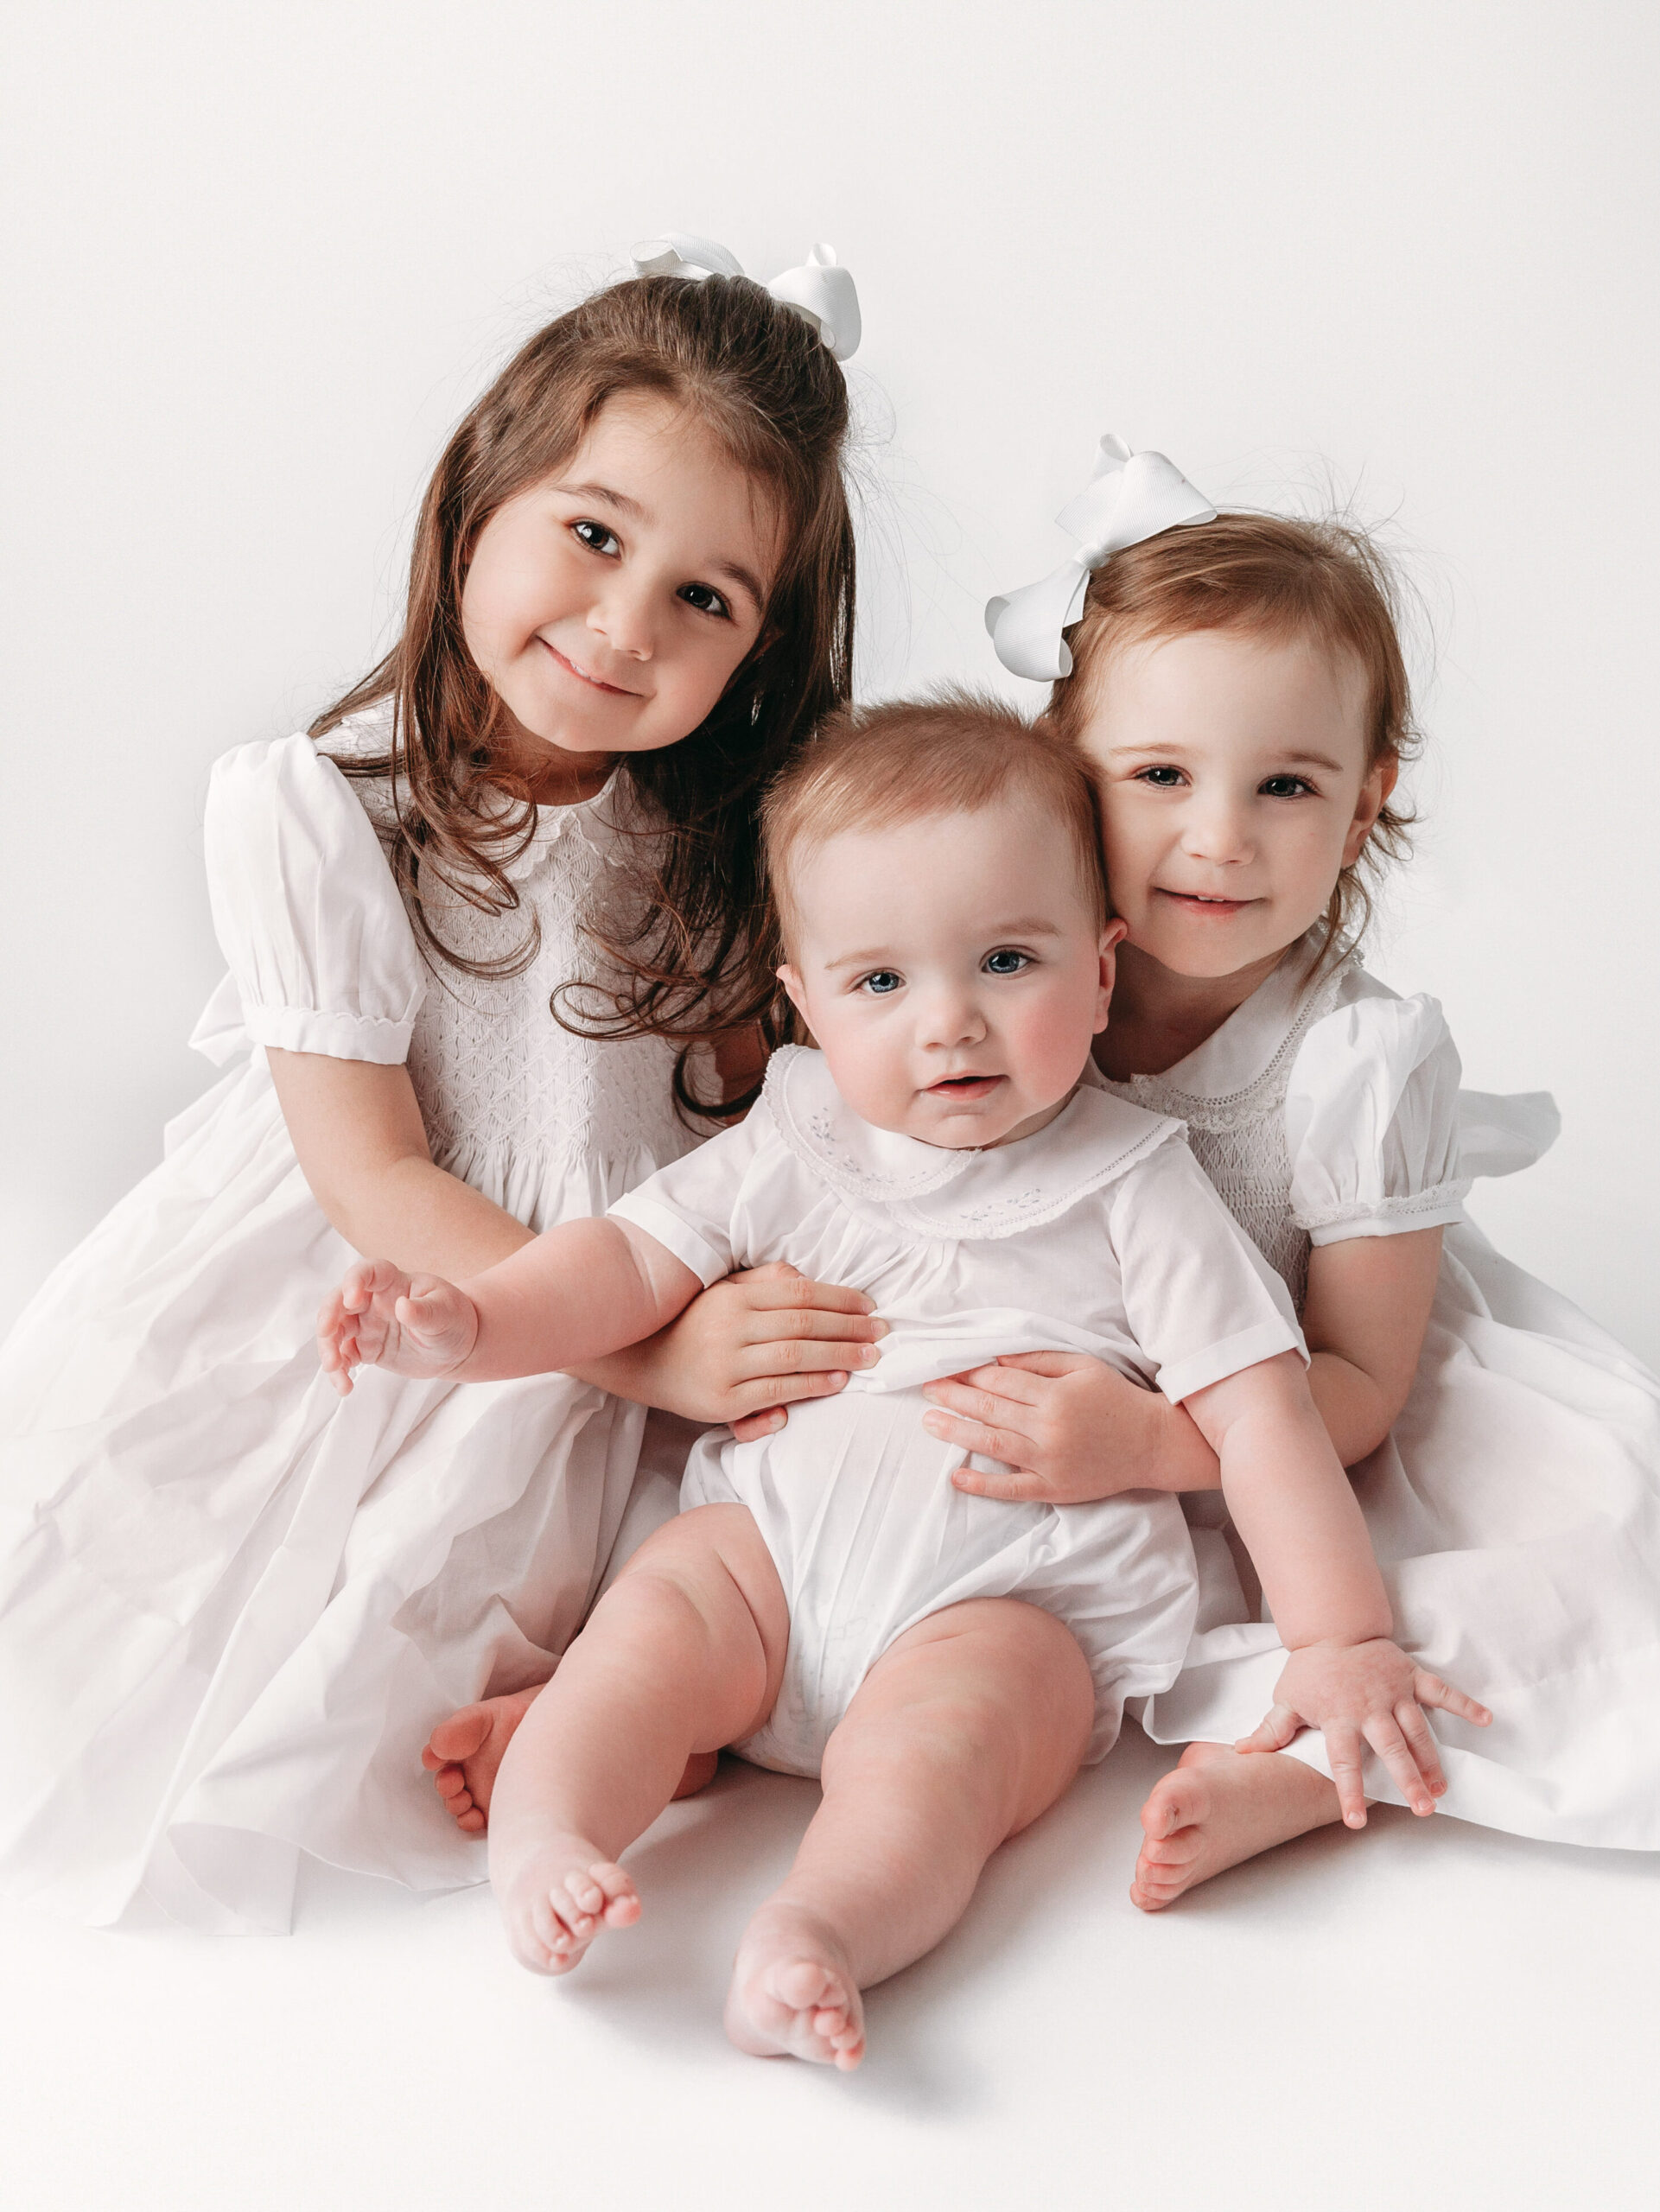 formal portrait of three siblings in white